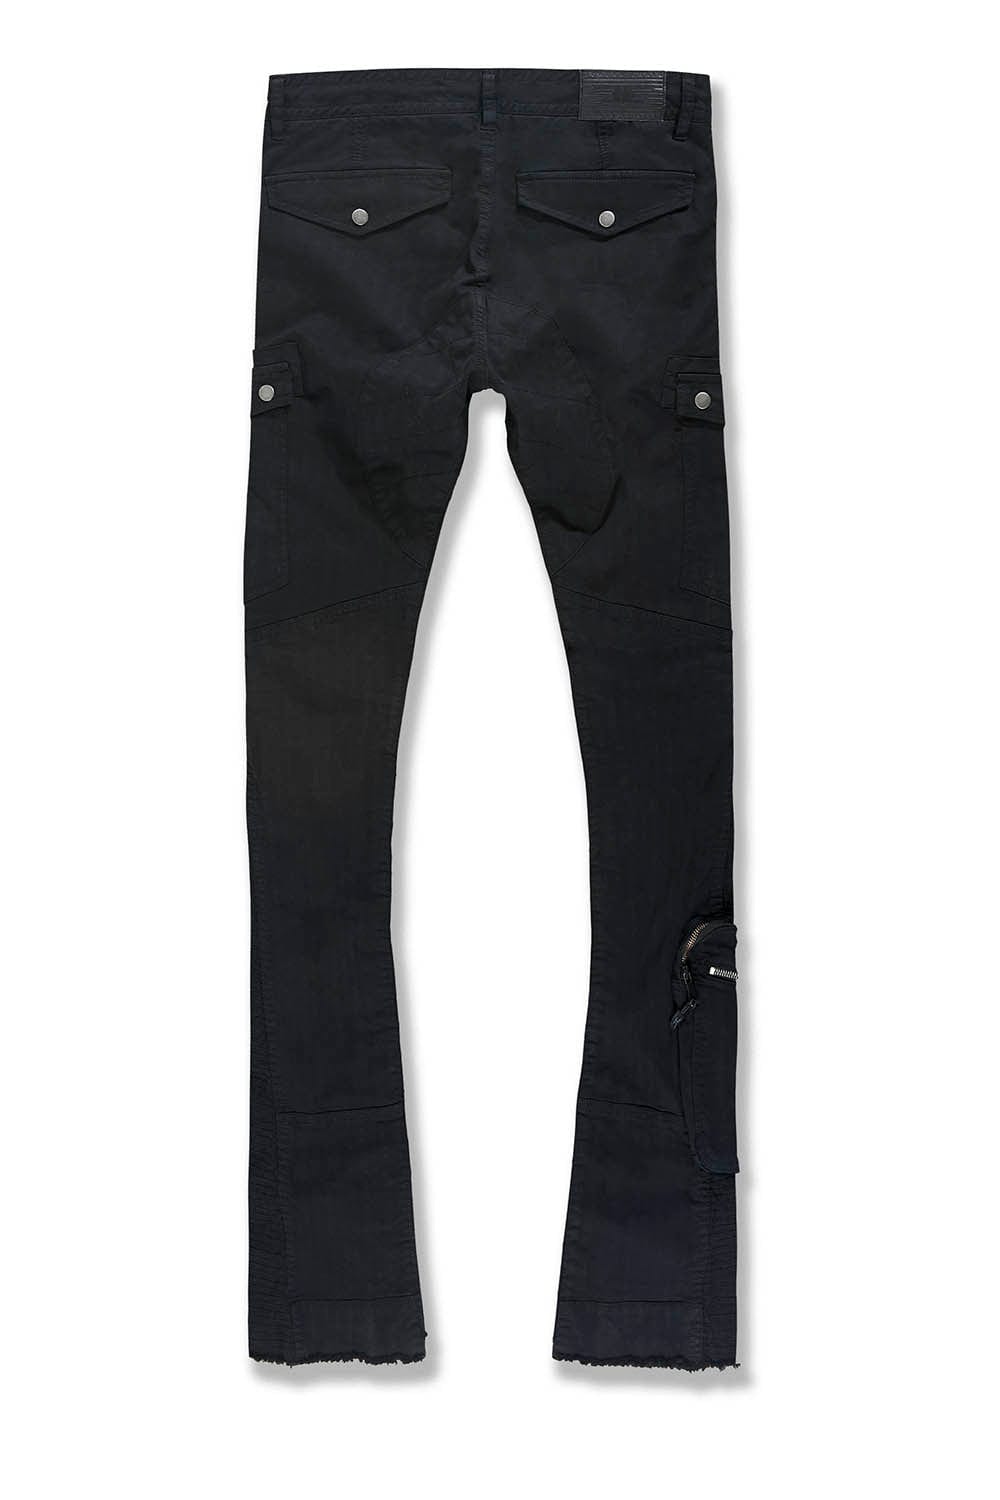 Jordan Craig Martin Stacked - Aviation Cargo Pants (Black)